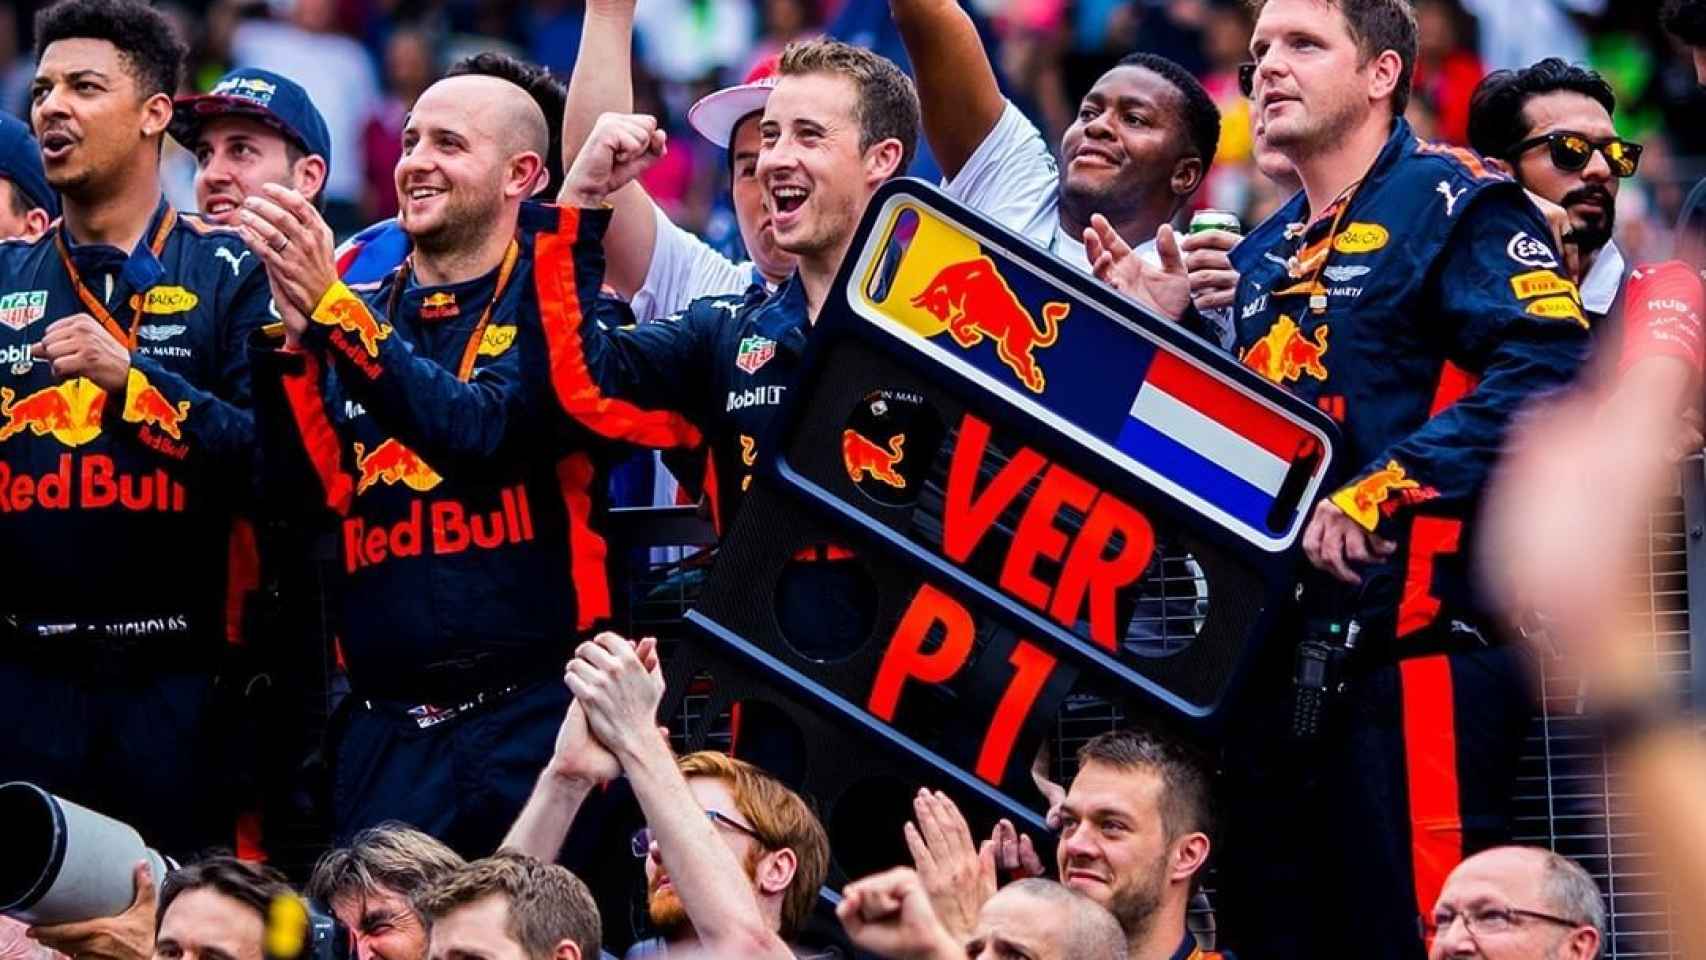 El equipo Red Bull celebra una victoria de Verstappen